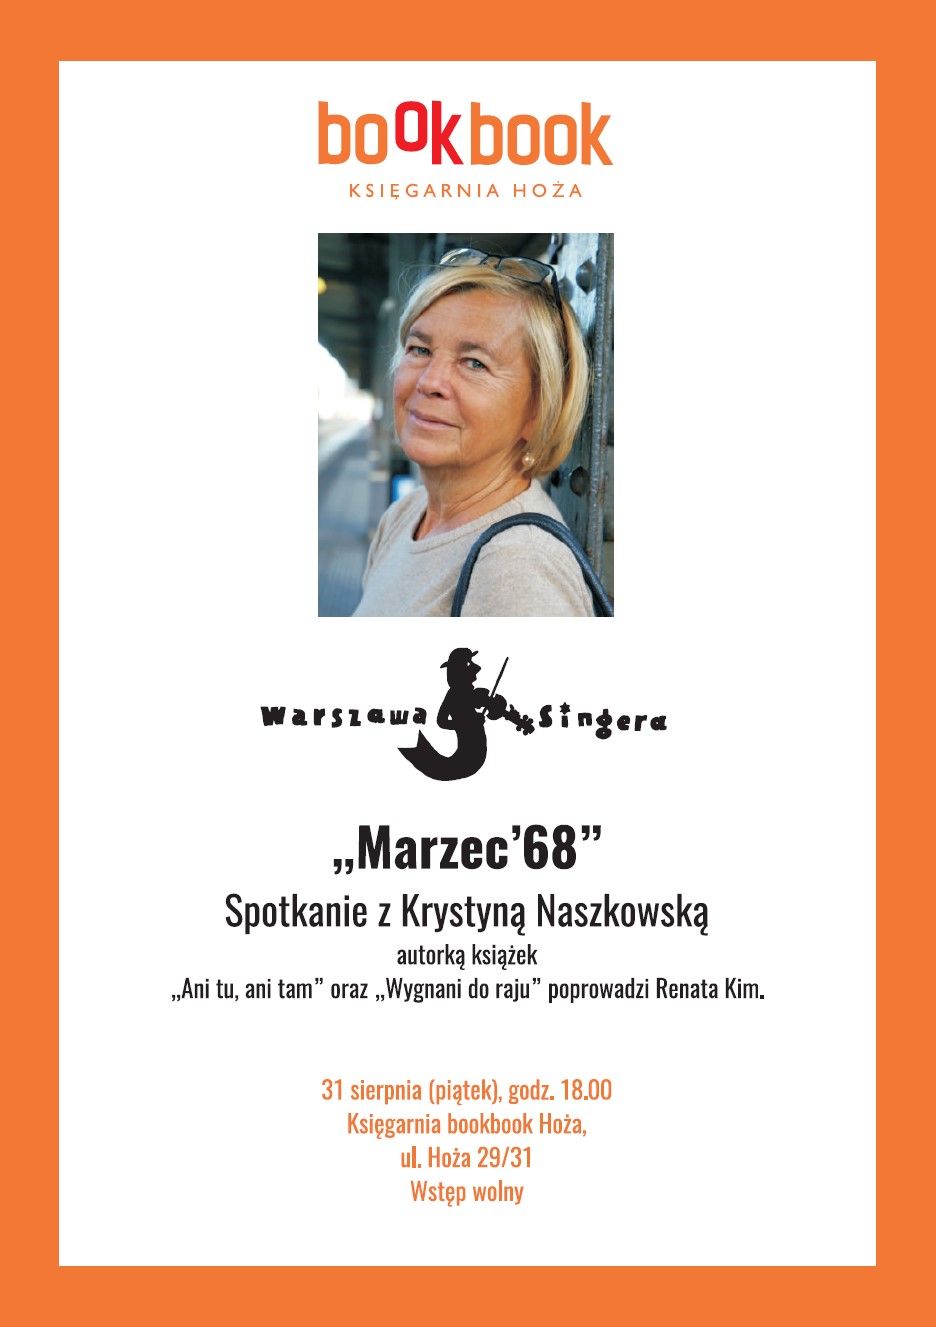 Festiwal Singera: Krystyna Naszkowska - BookBook Hoża